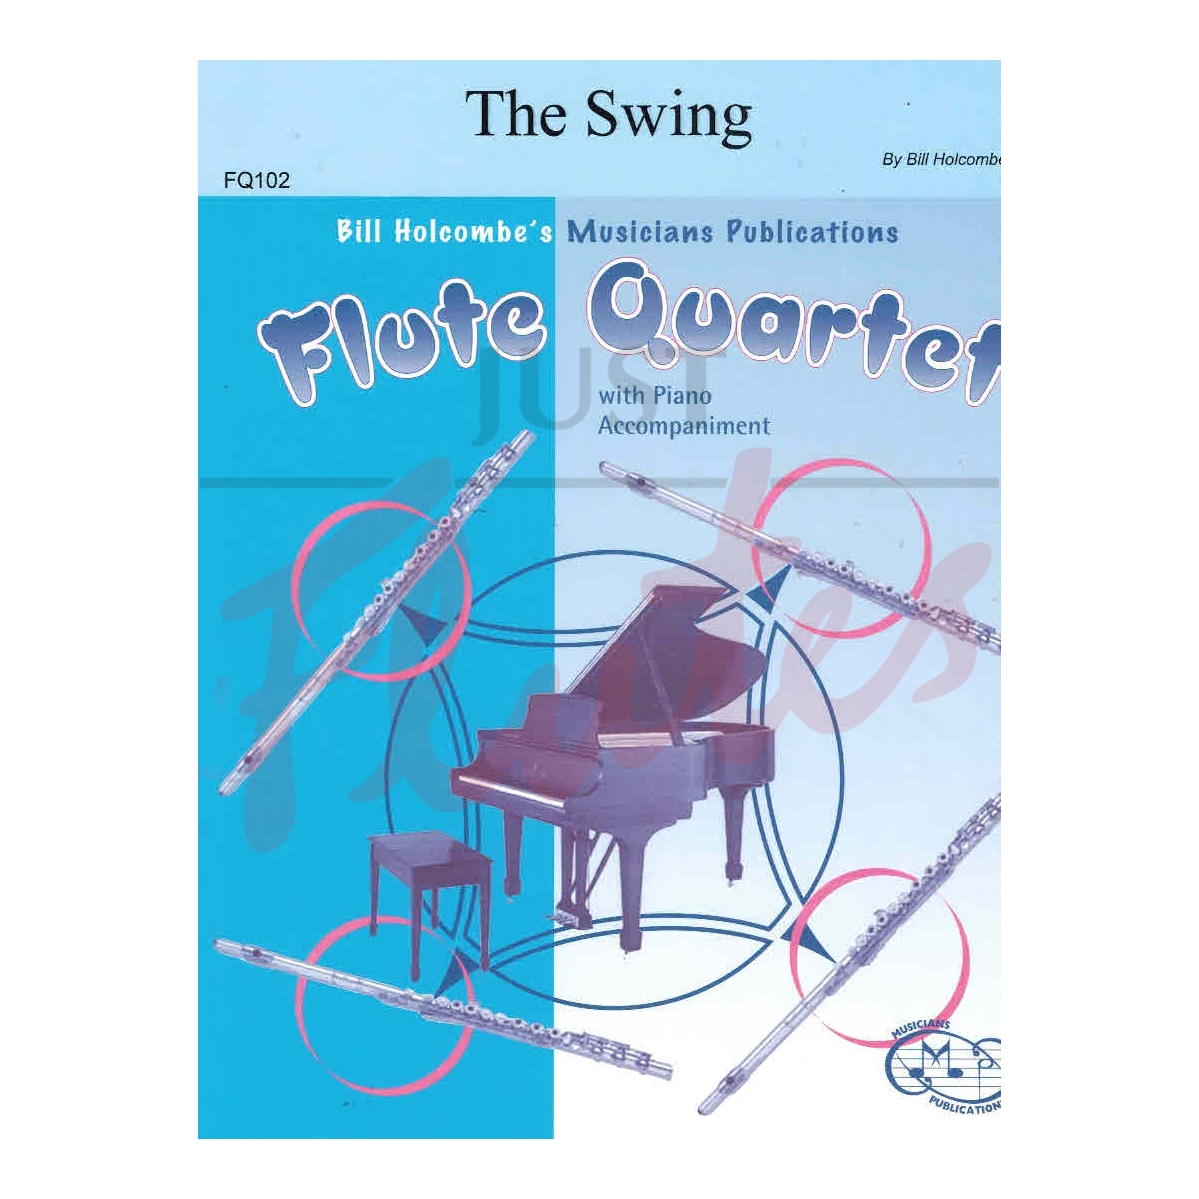 The Swing [Flute Quartet]